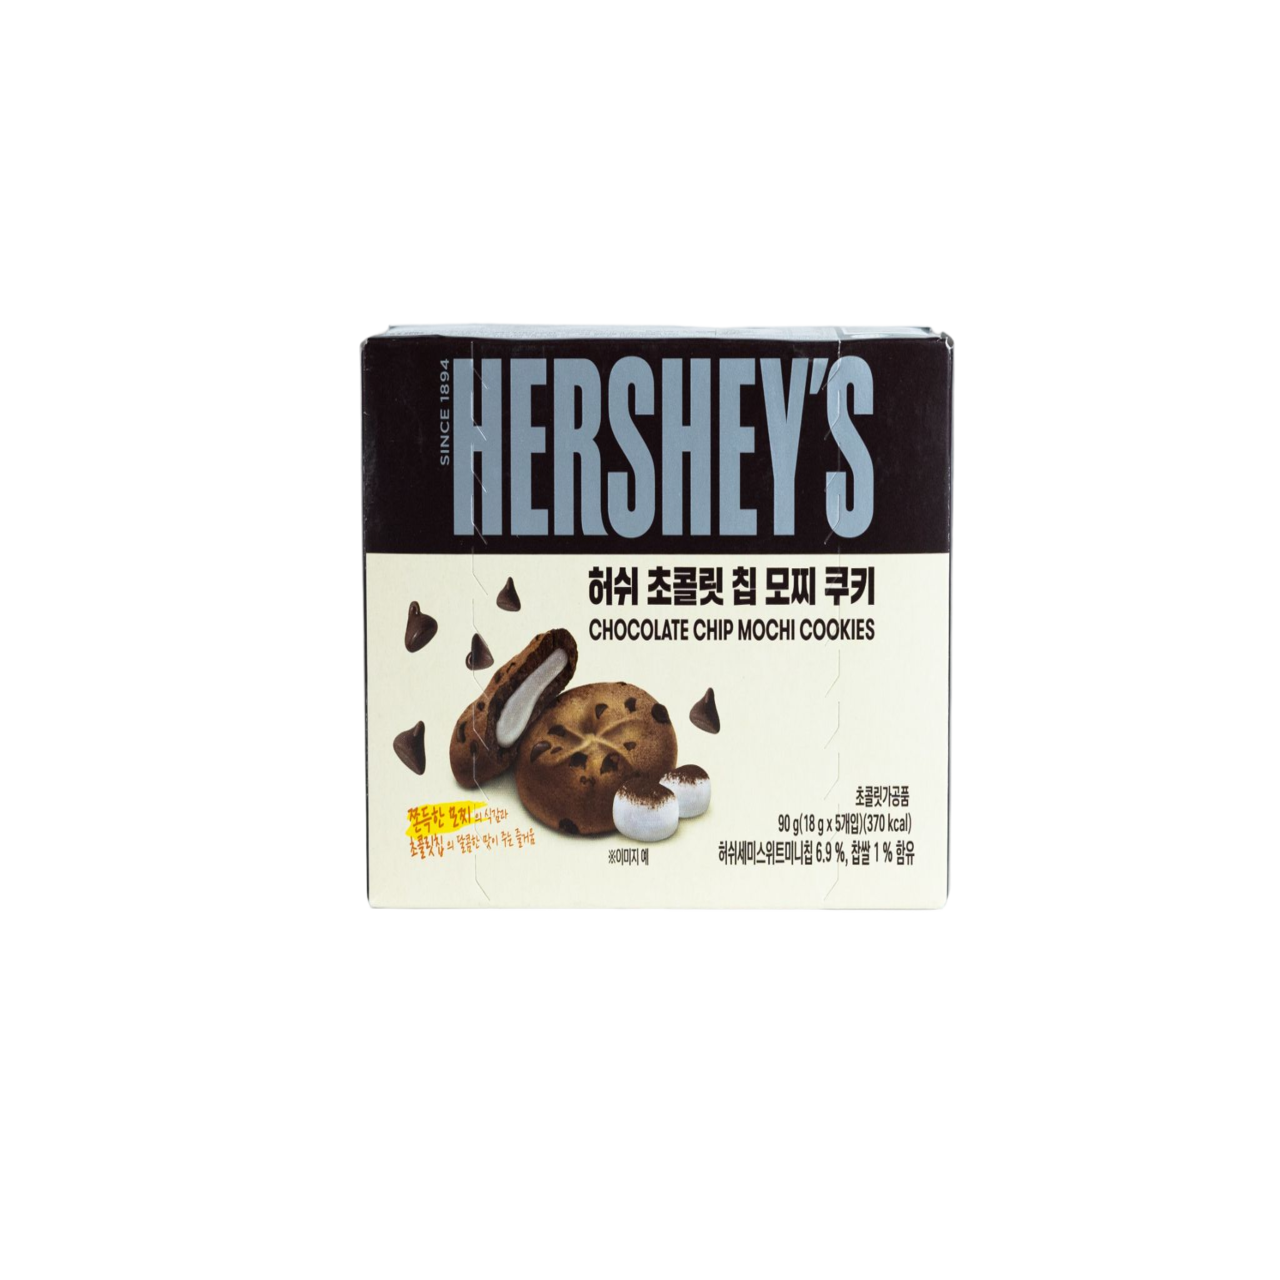 Hershey’s chocolate chip mochi cookies